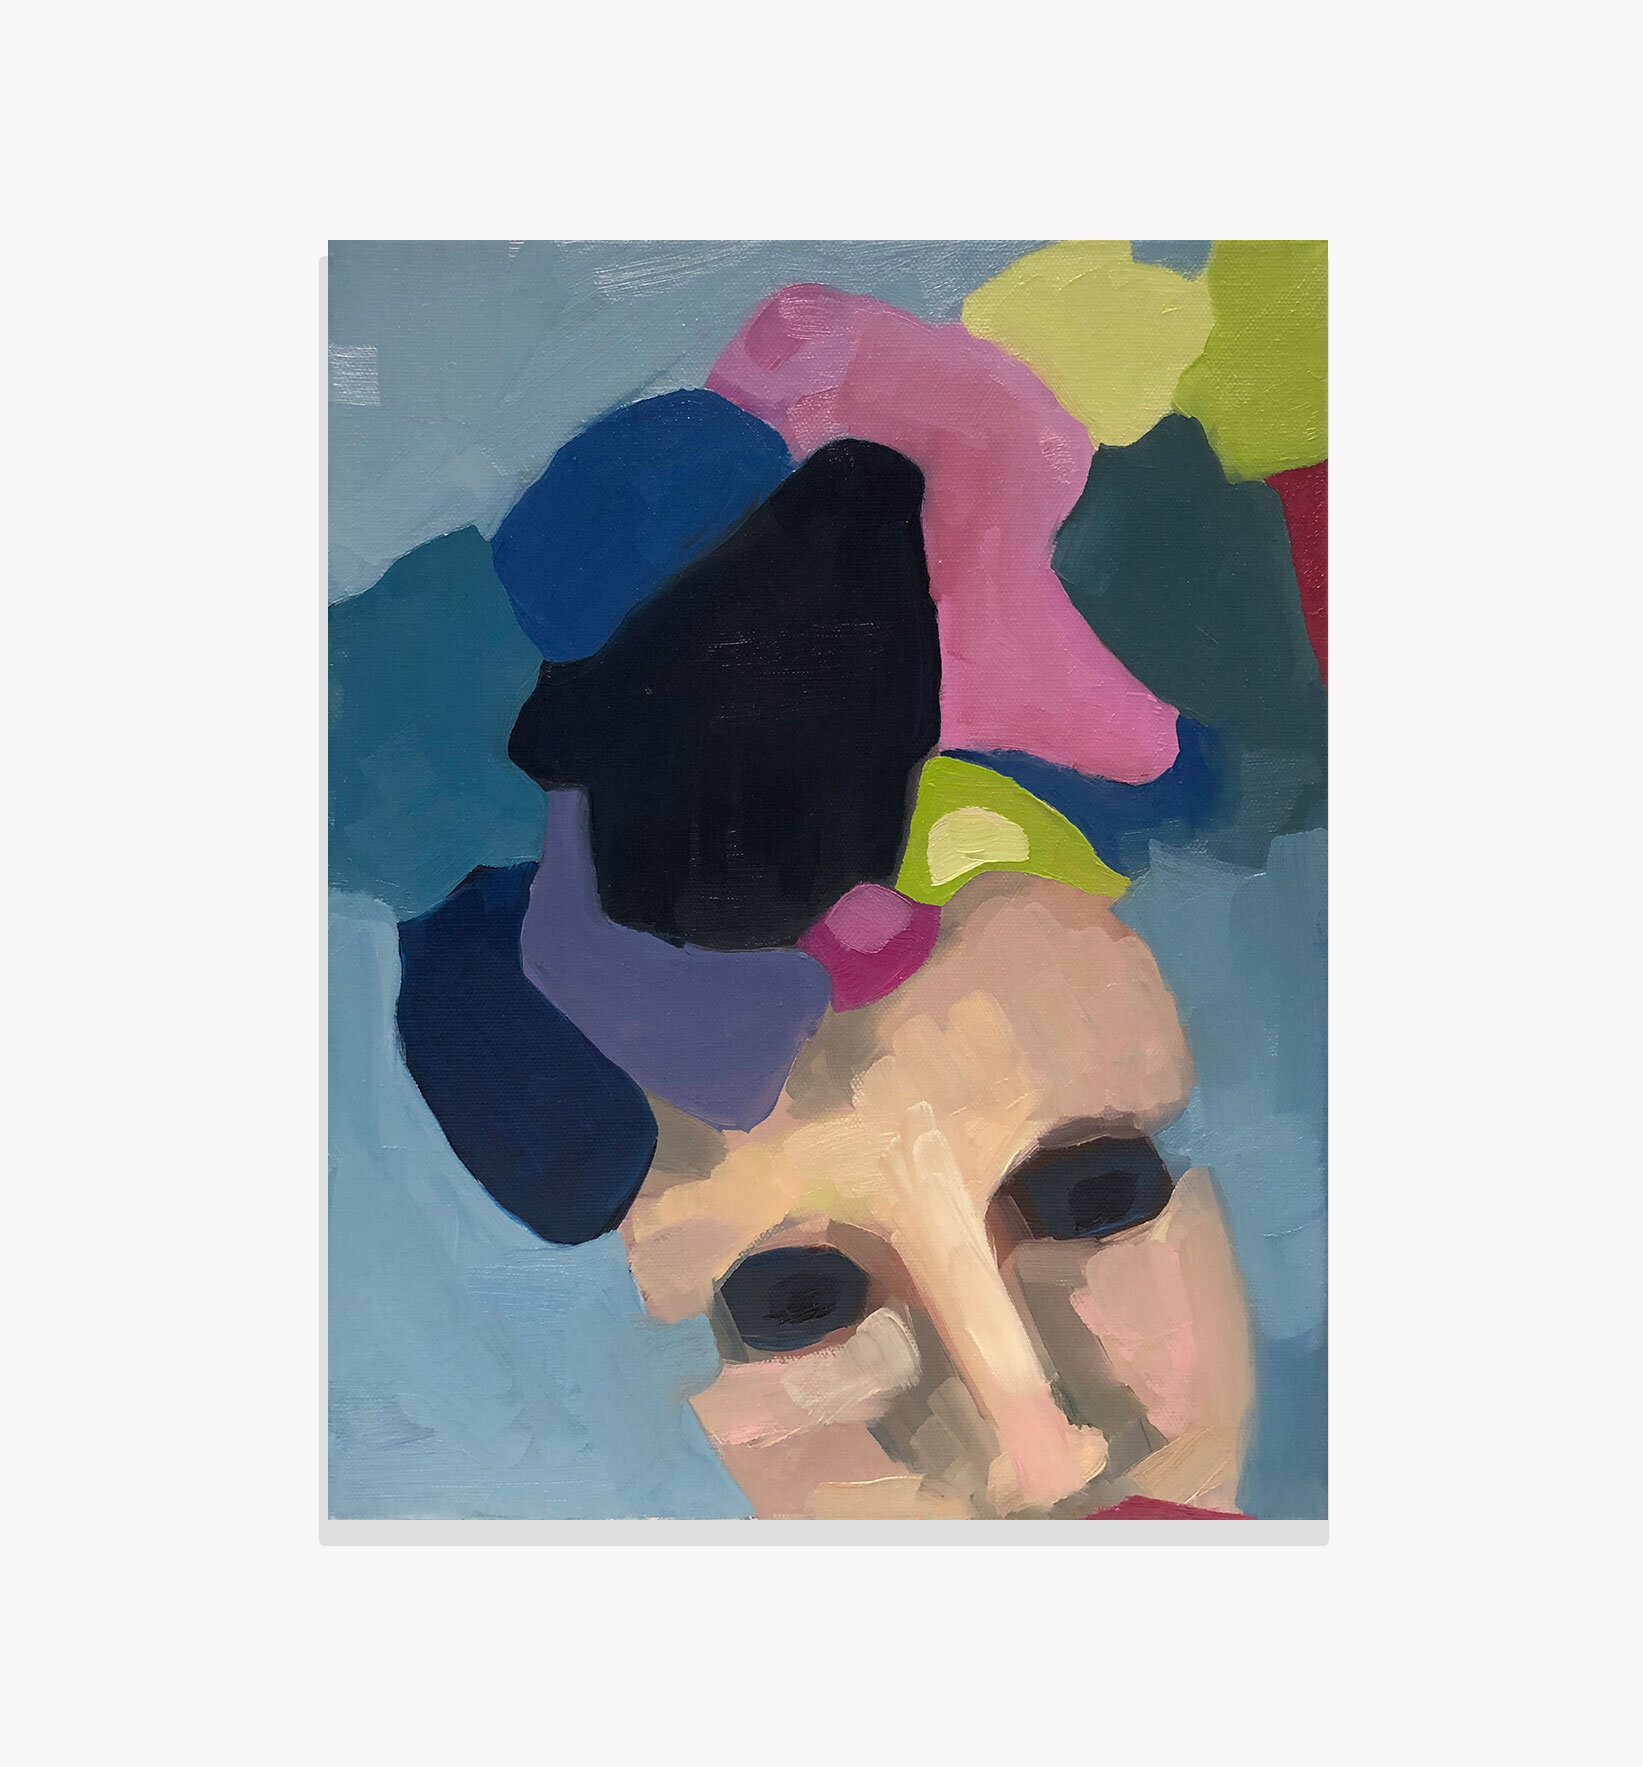   Seventeen , Kristi Head 2020. Oil on canvas, 14 x 1 1 inches. 